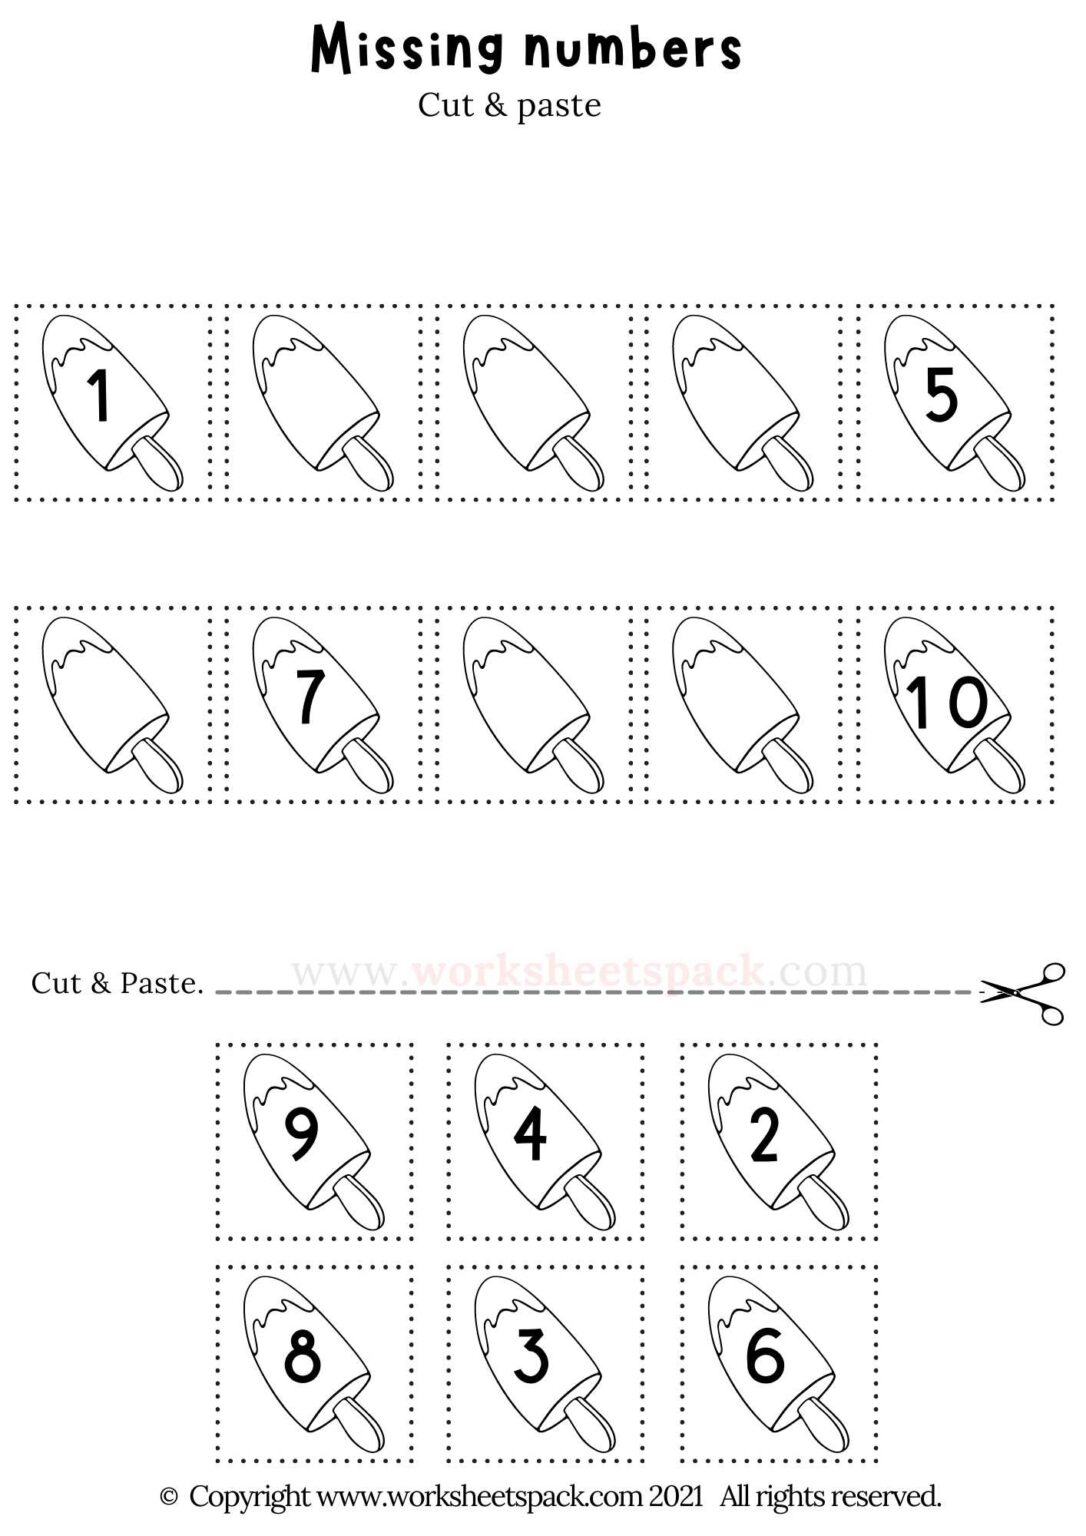 cut-and-paste-worksheets-worksheetspack